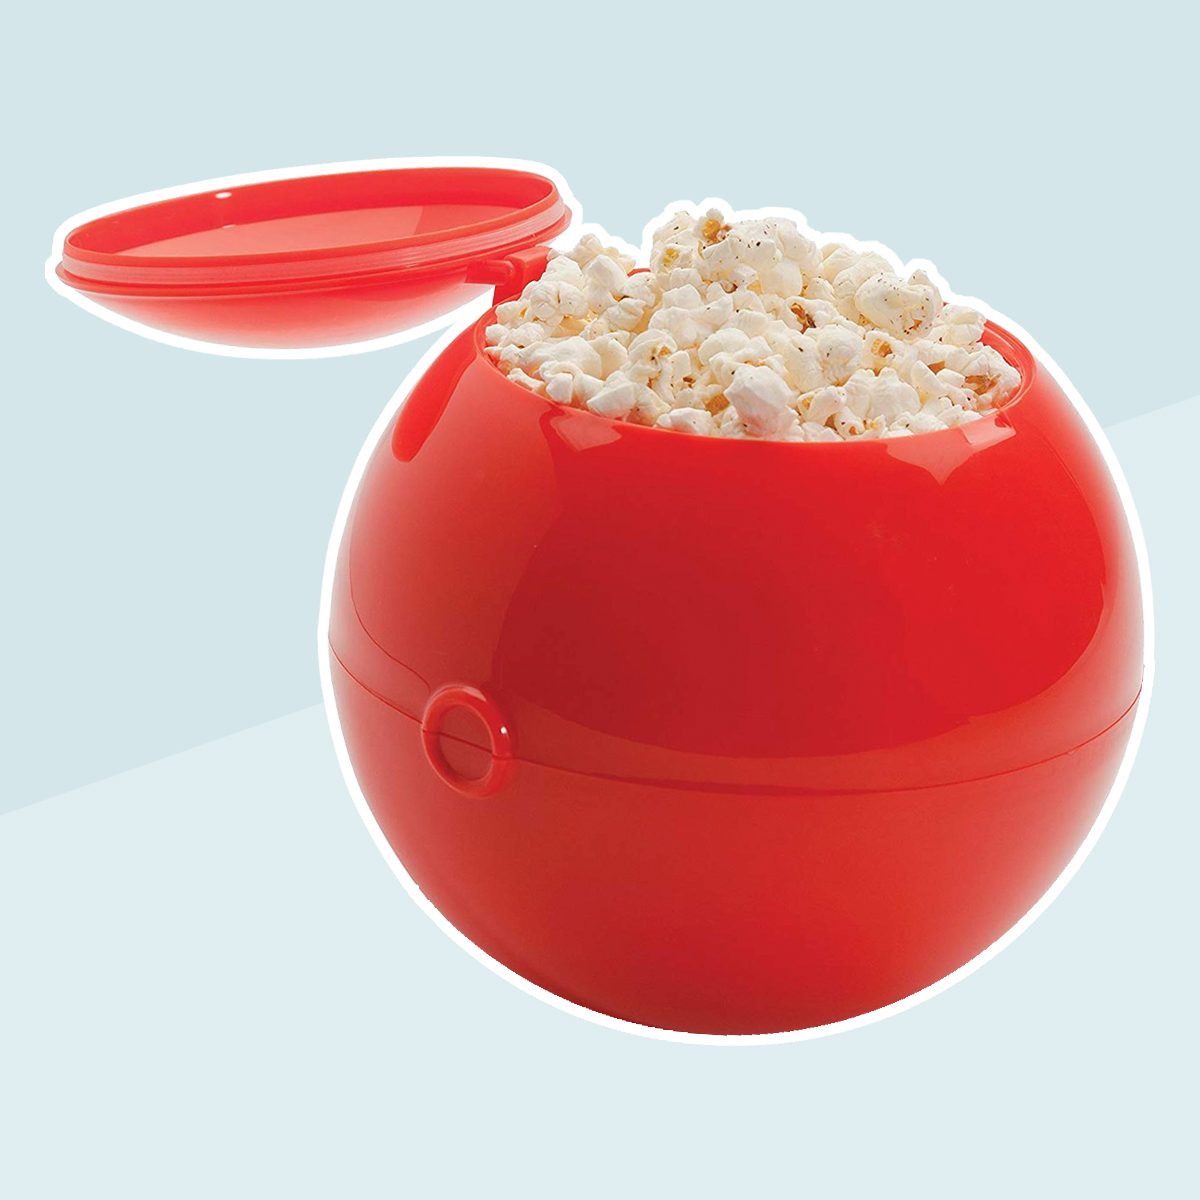 https://www.tasteofhome.com/wp-content/uploads/2018/10/FuhlSpeed-KPB-27-Popcorn-Ball-Microwavable-Popcorn-Maker-Mixer-.jpg?fit=696%2C696